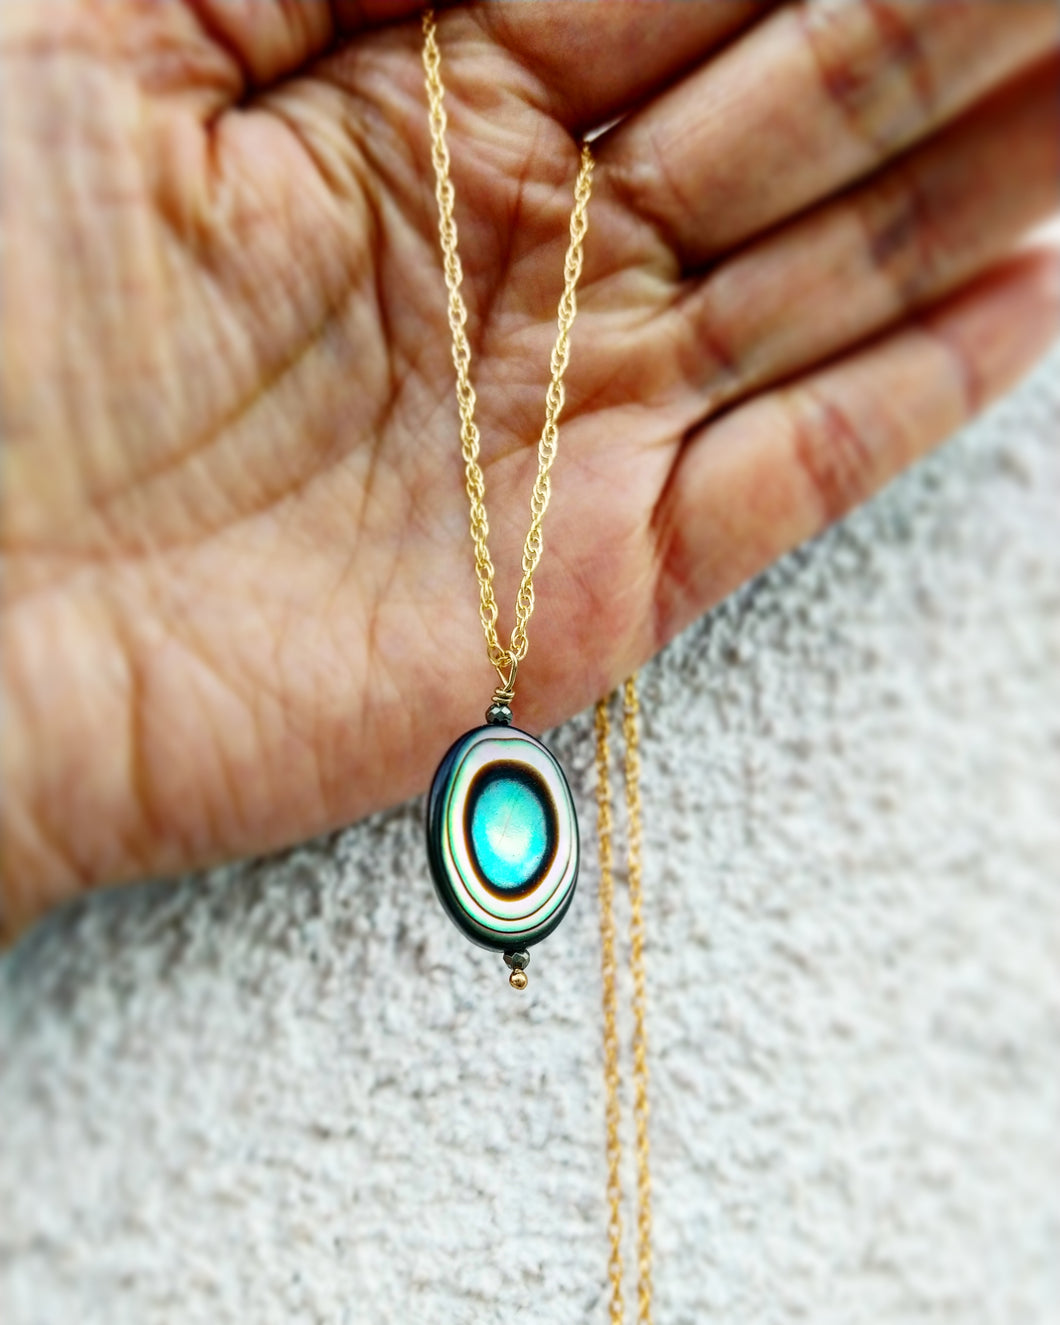 Oval Abalone pendant necklace